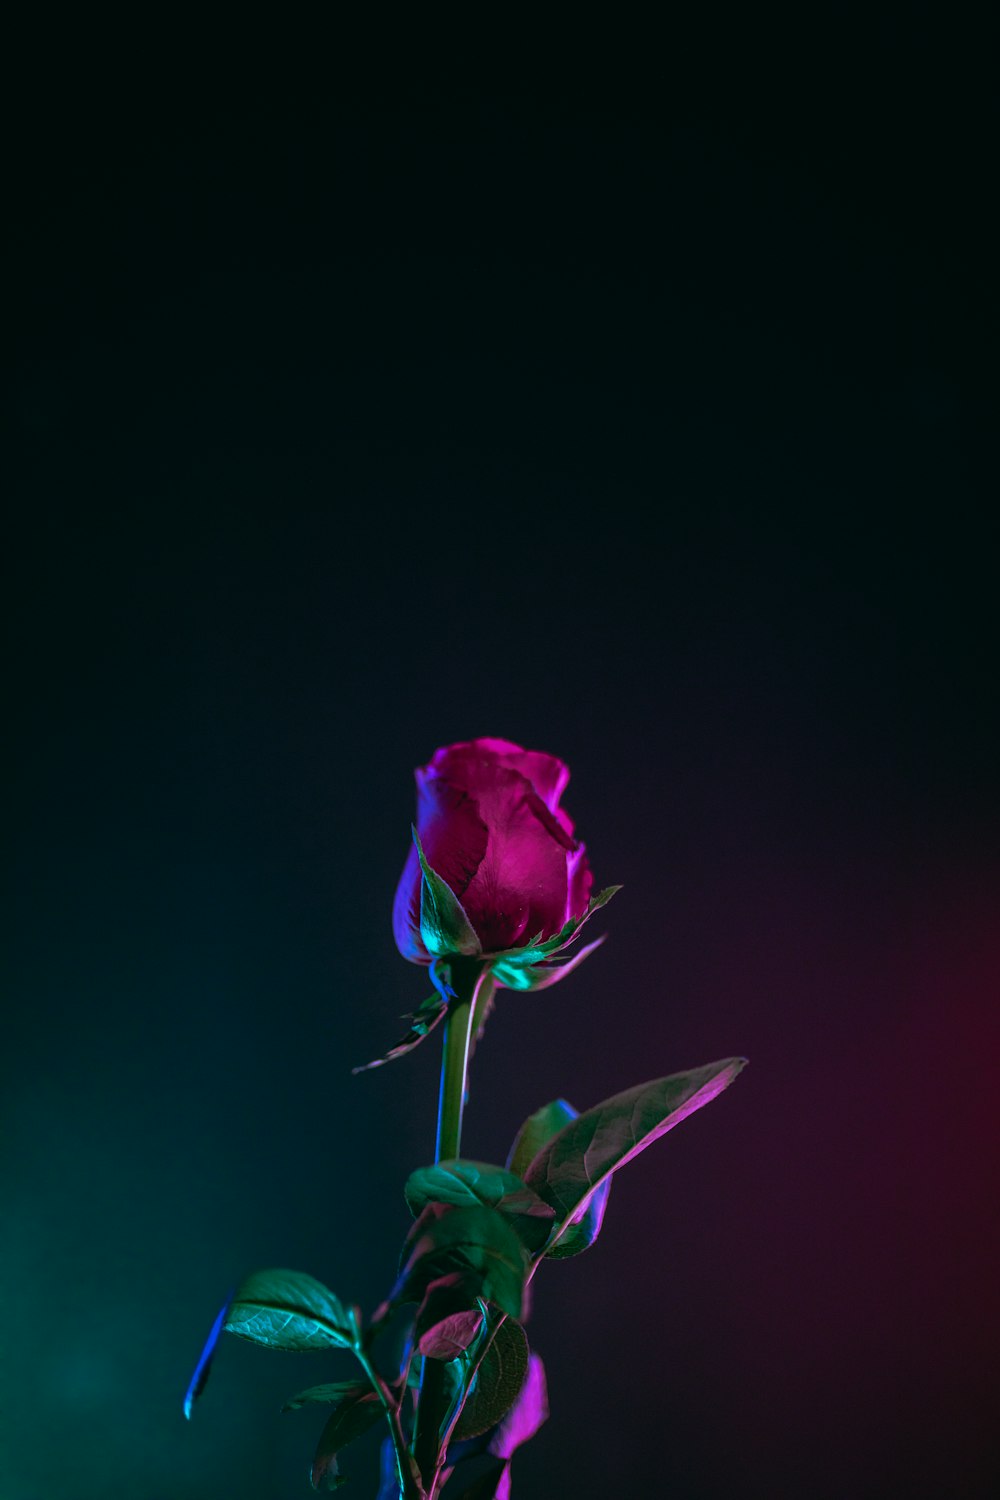 foto di fiori di rosa rossa in superficie scura